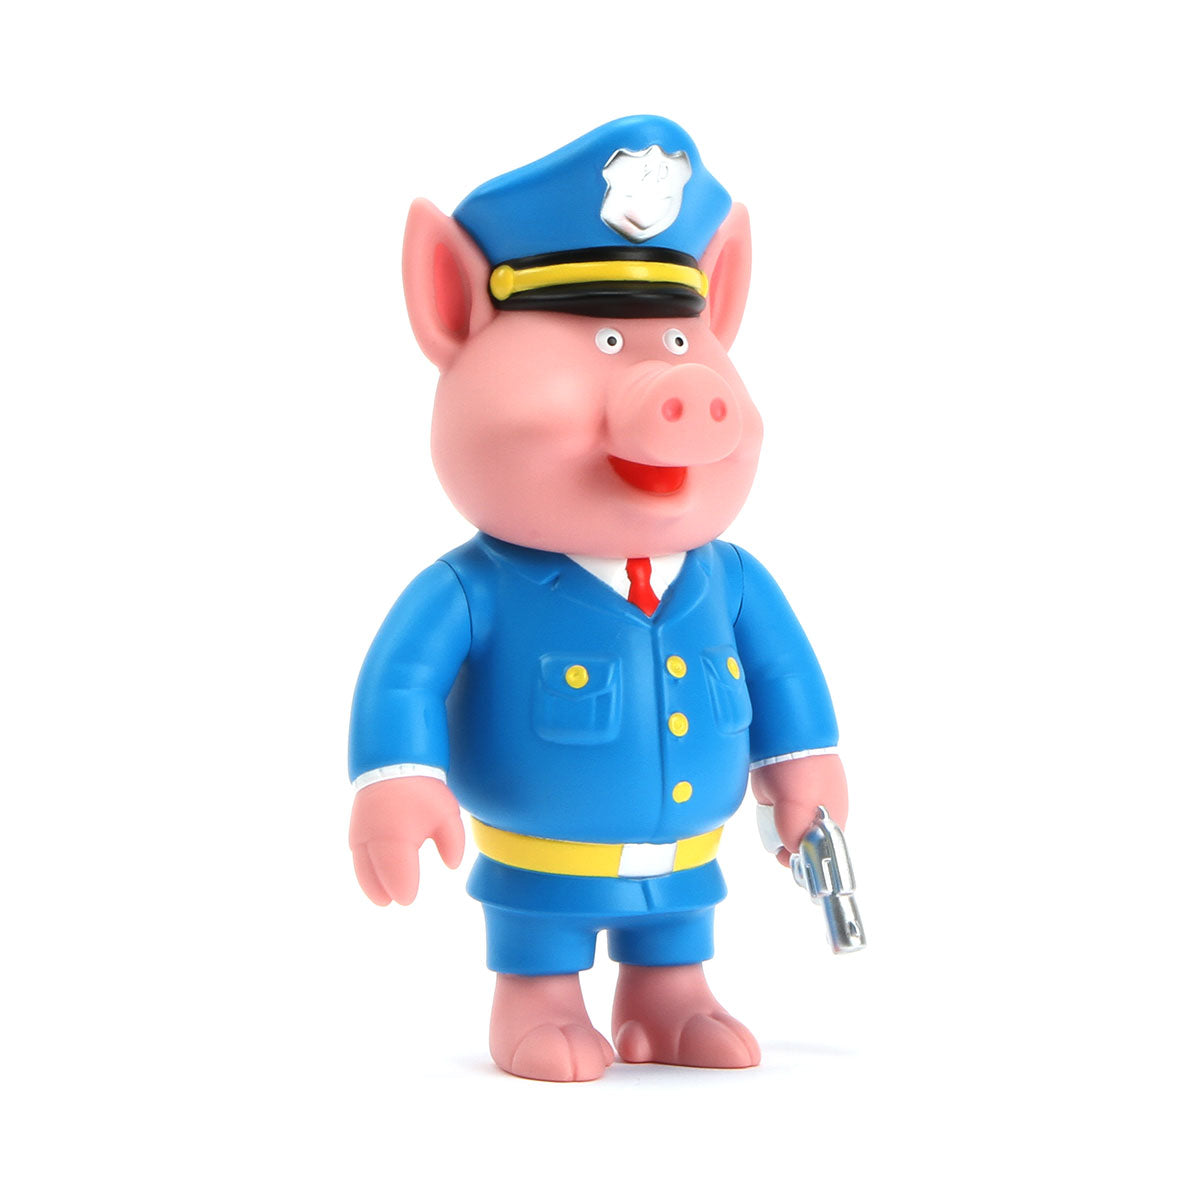 StrangeLove Pig Officer Vinyl Toy